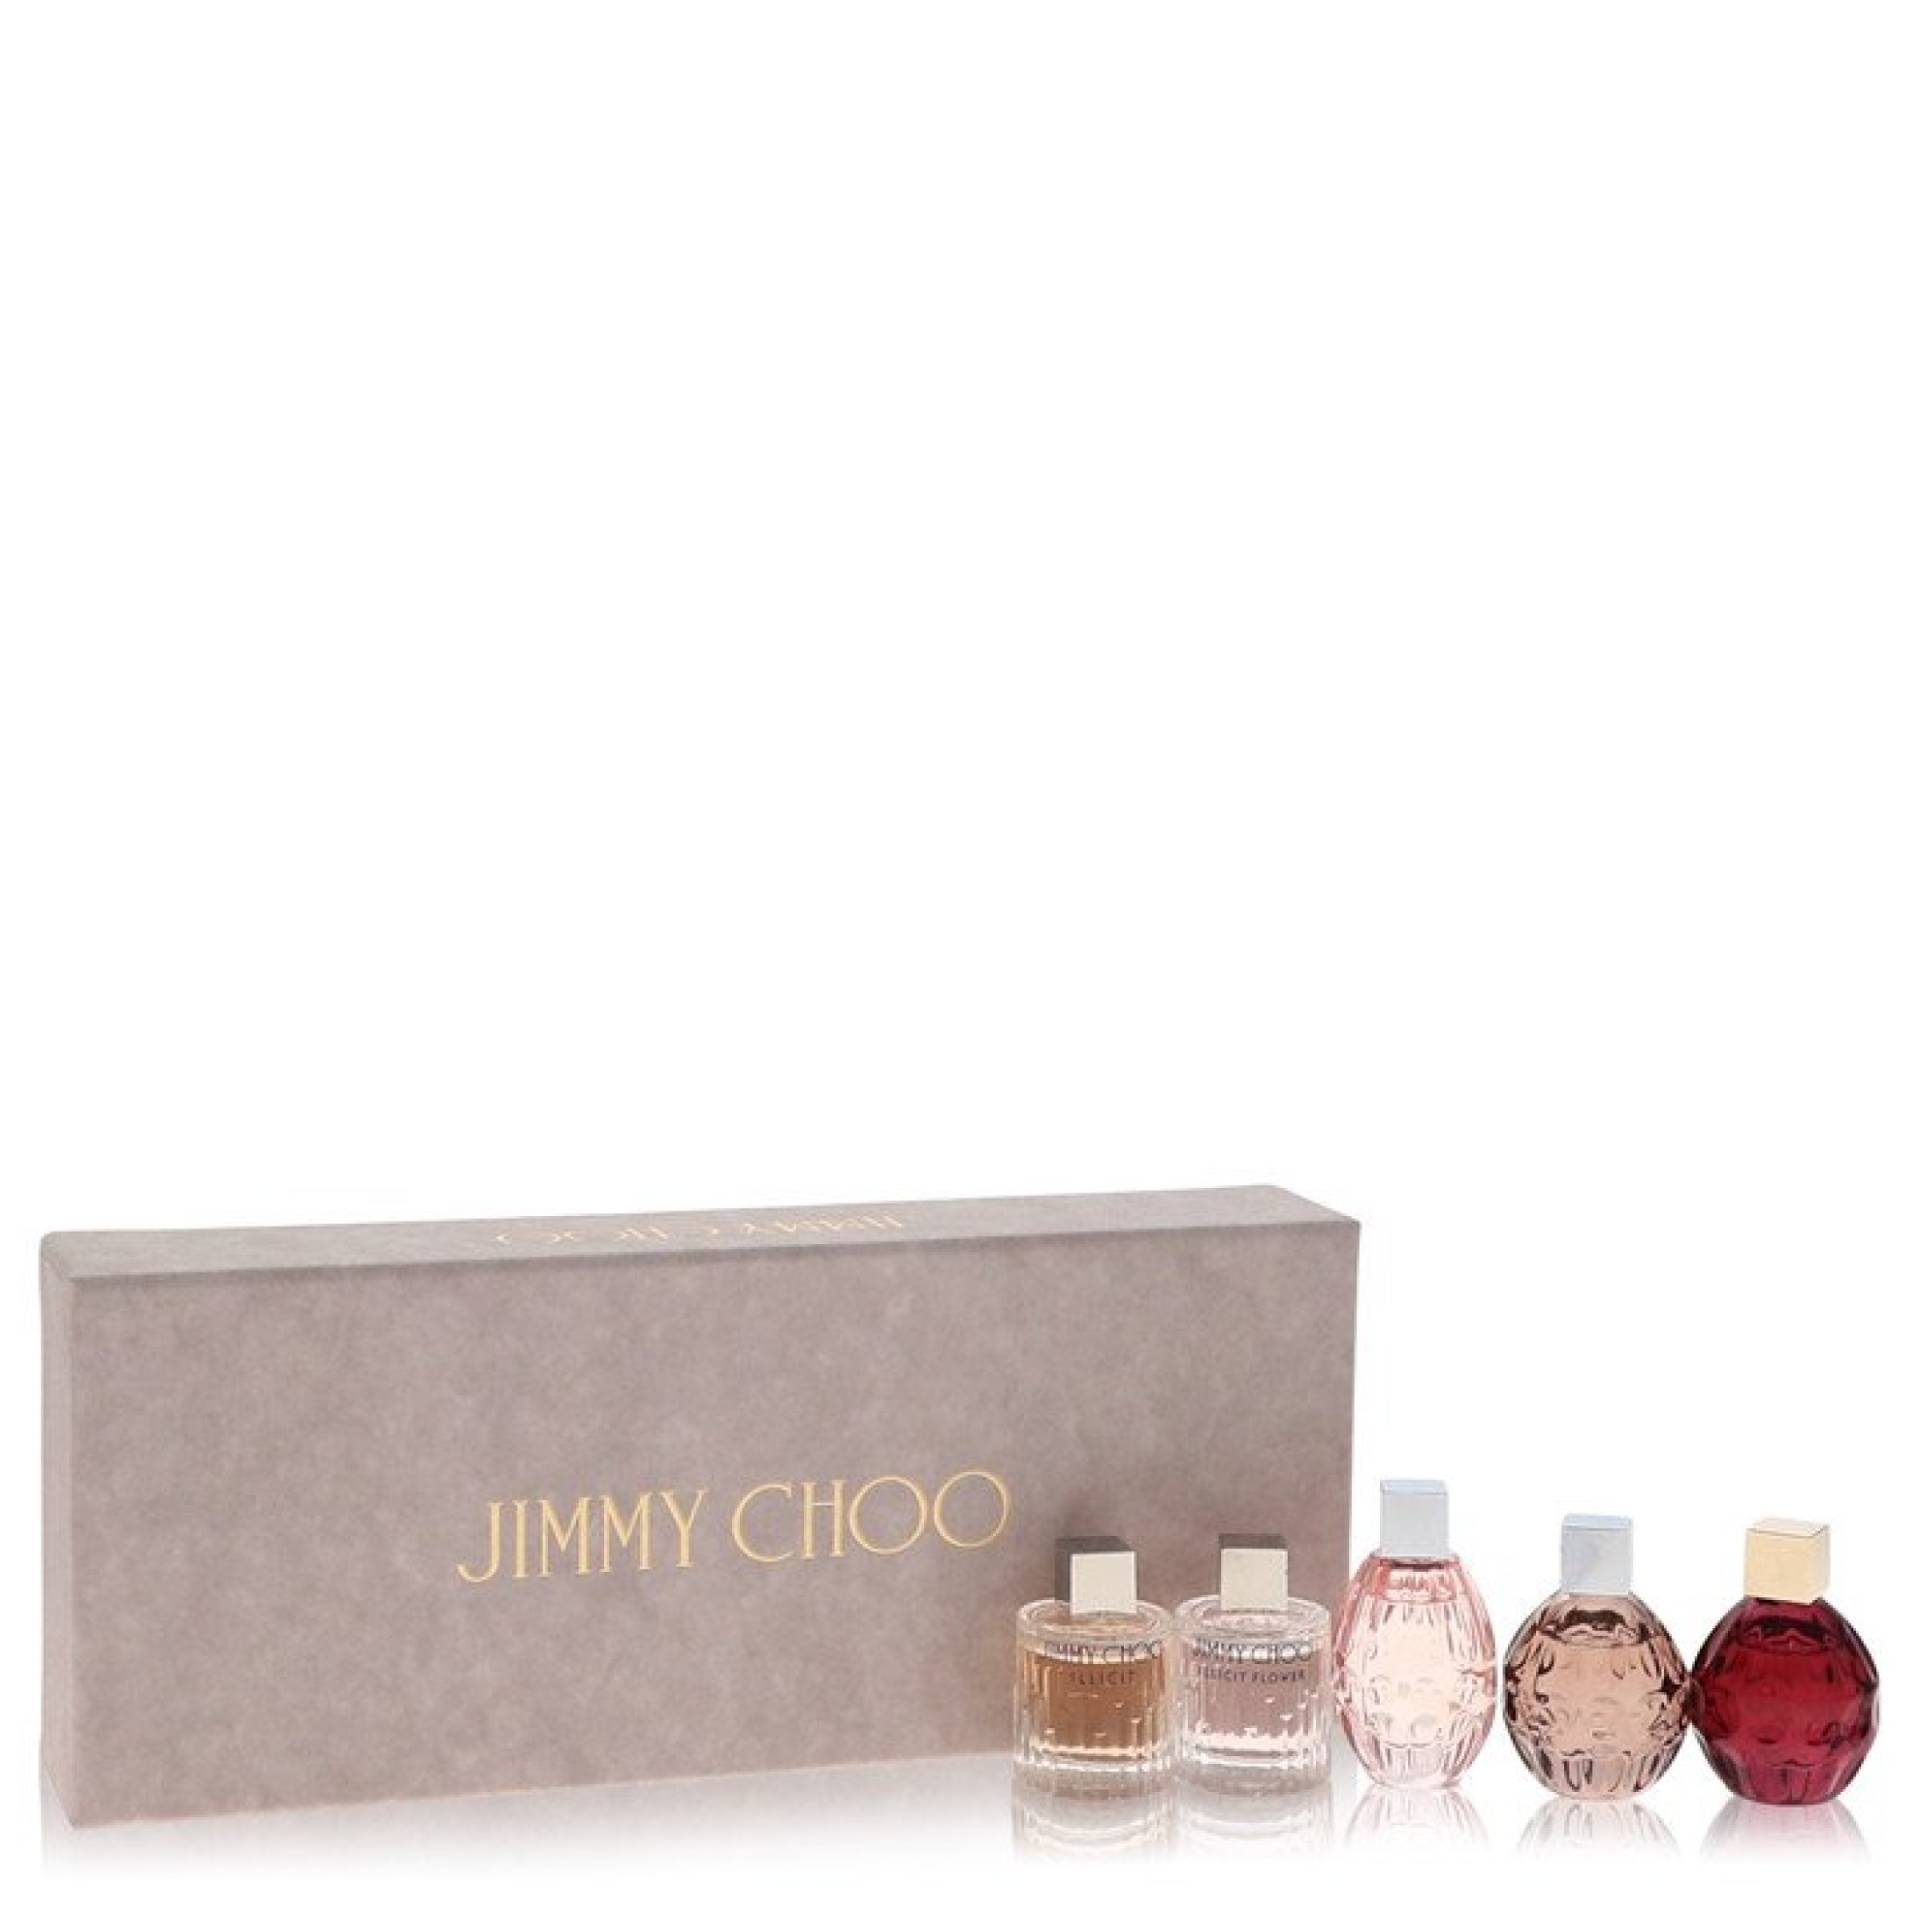 Jimmy Choo Fever Gift Set -- 3 x 5 ml Mini EDP Sprays in  Illicit, , &  Fever + 2 x 5 ml Mini EDT sprays in  Illicit Flower &  Leau von Jimmy Choo